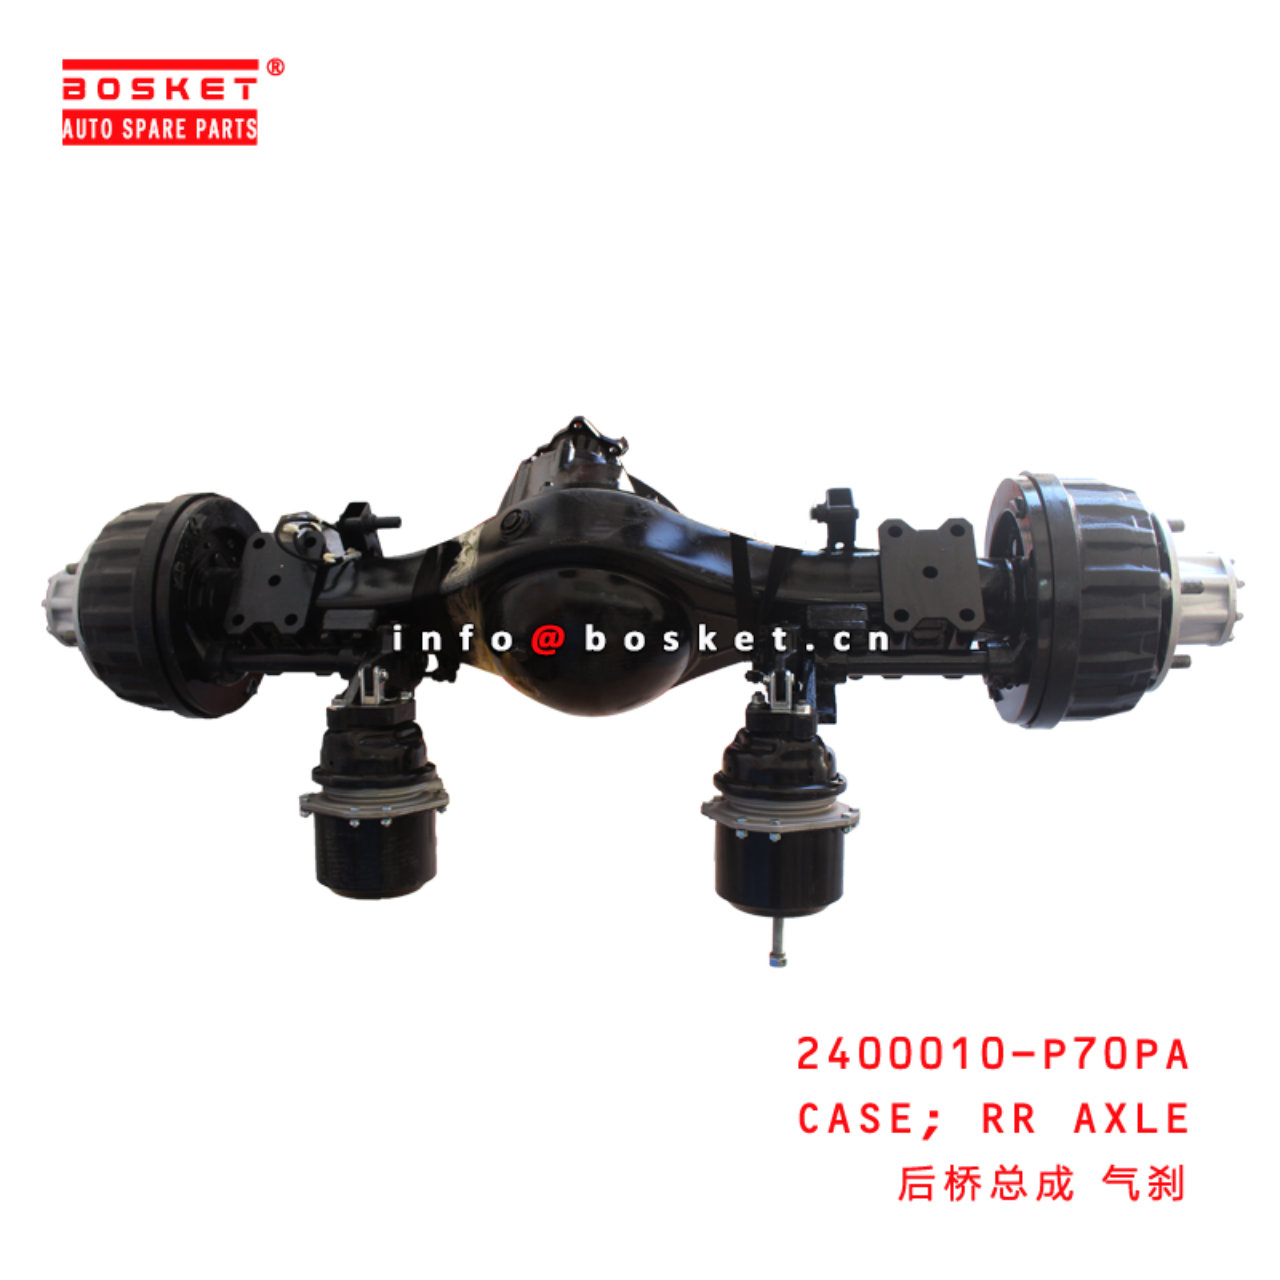 2400010-P70PA Rear AXLE CASE suitable for ISUZU   2400010-P70PA